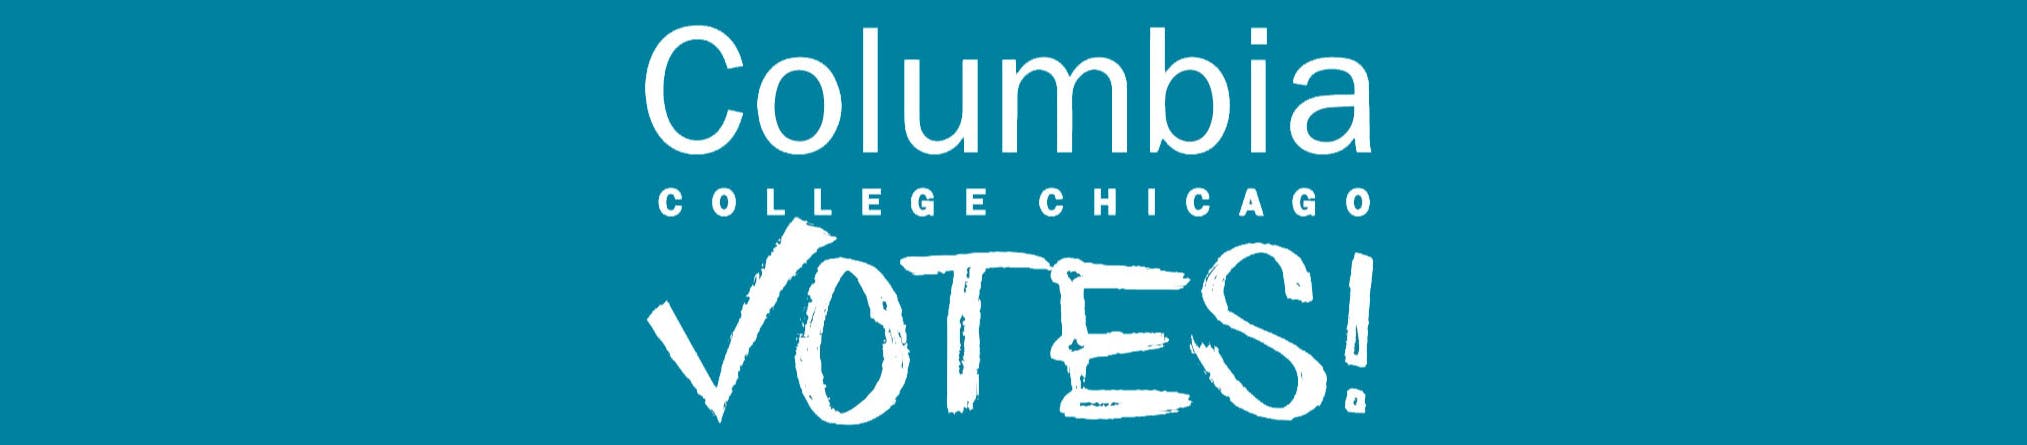 Columbia votes logo